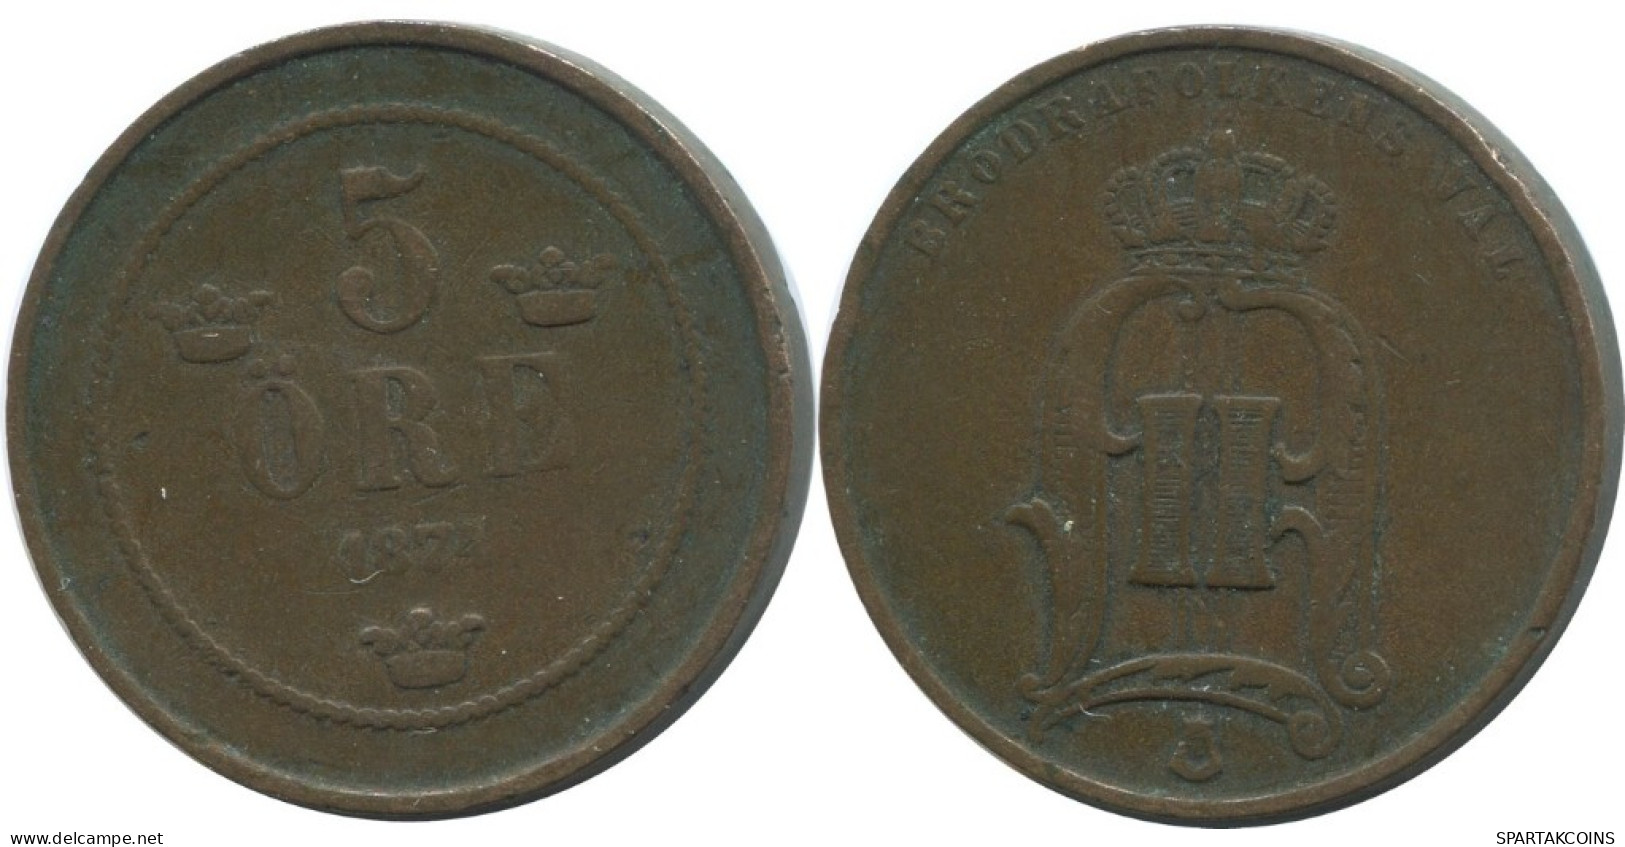 5 ORE 1874 SUECIA SWEDEN Moneda #AC573.2.E.A - Sweden